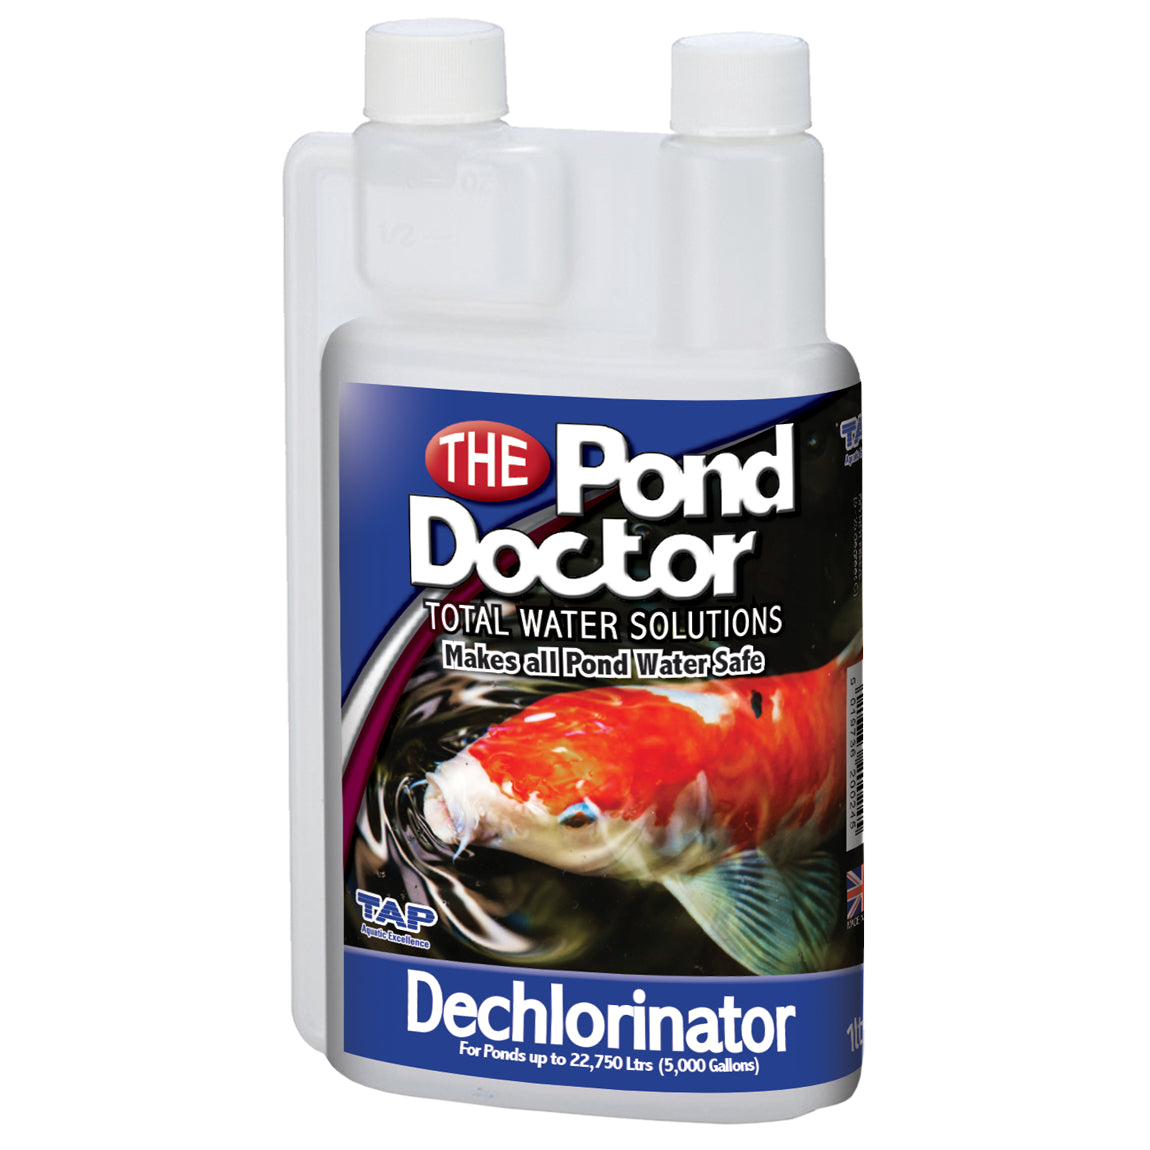 TAP Pond Doctor Dechlorinator 250-2500ml